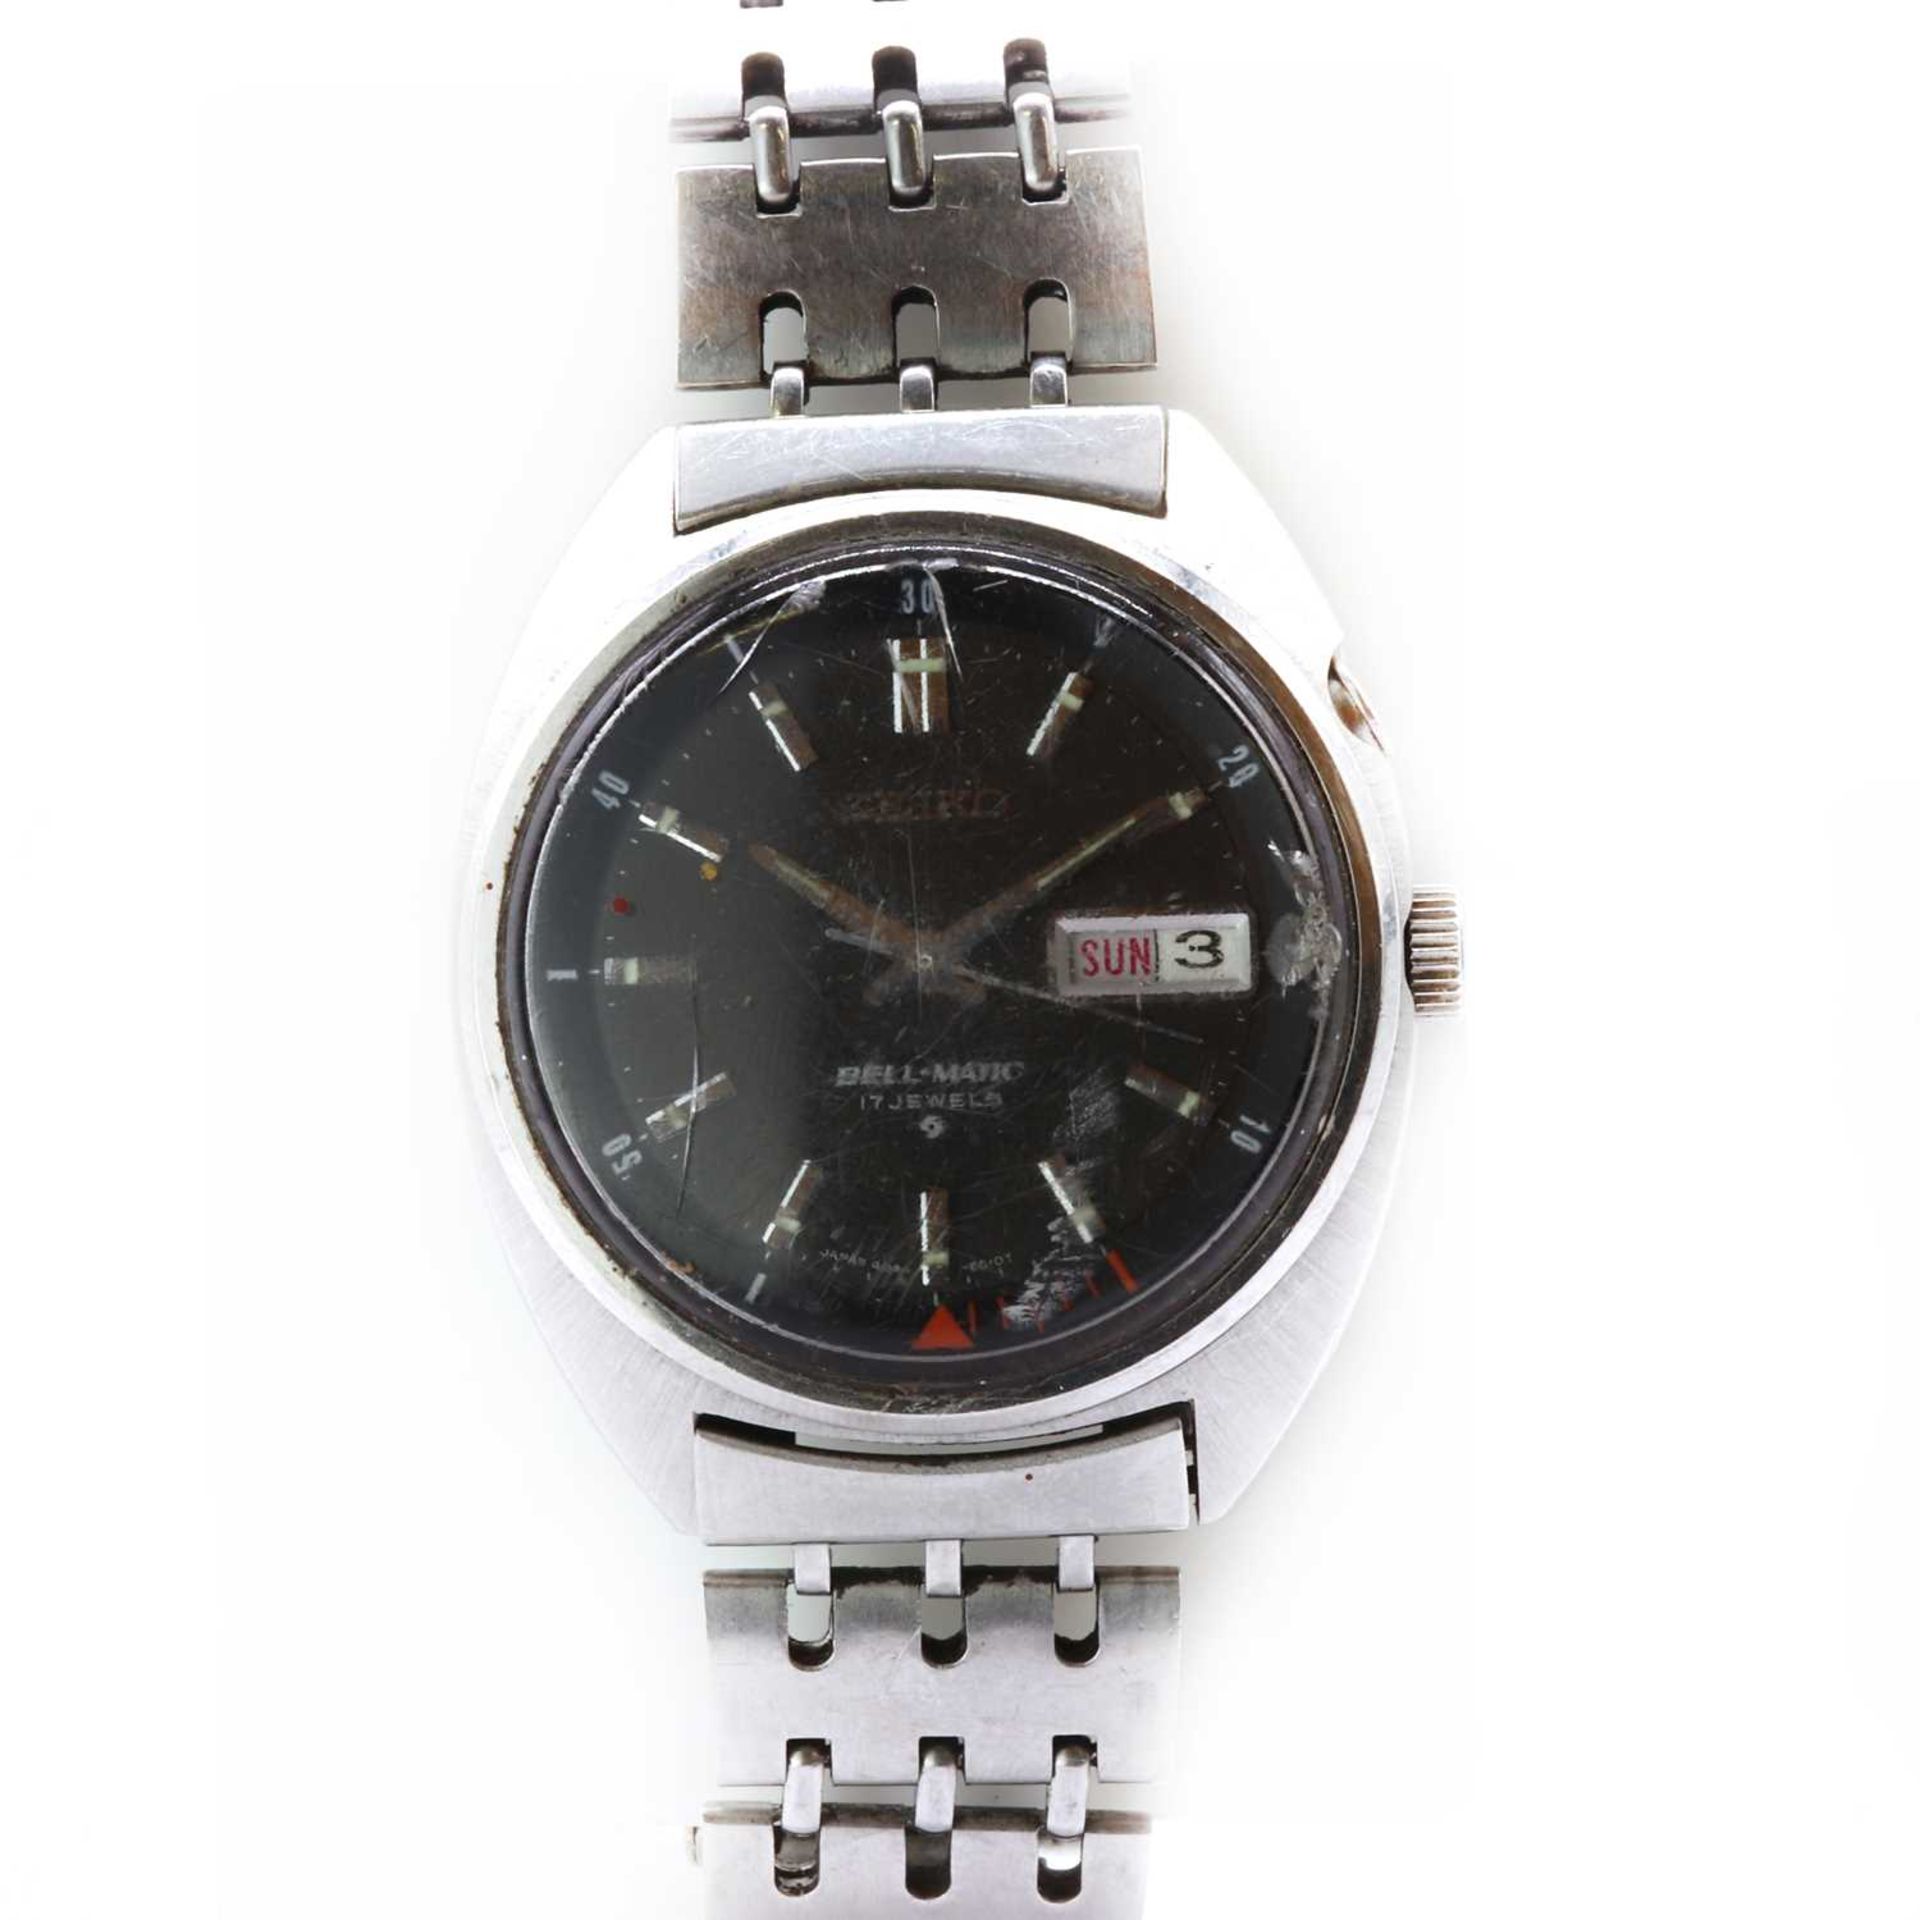 A gentlemen's stainless steel Seiko 'Bell-matic' automatic bracelet watch,